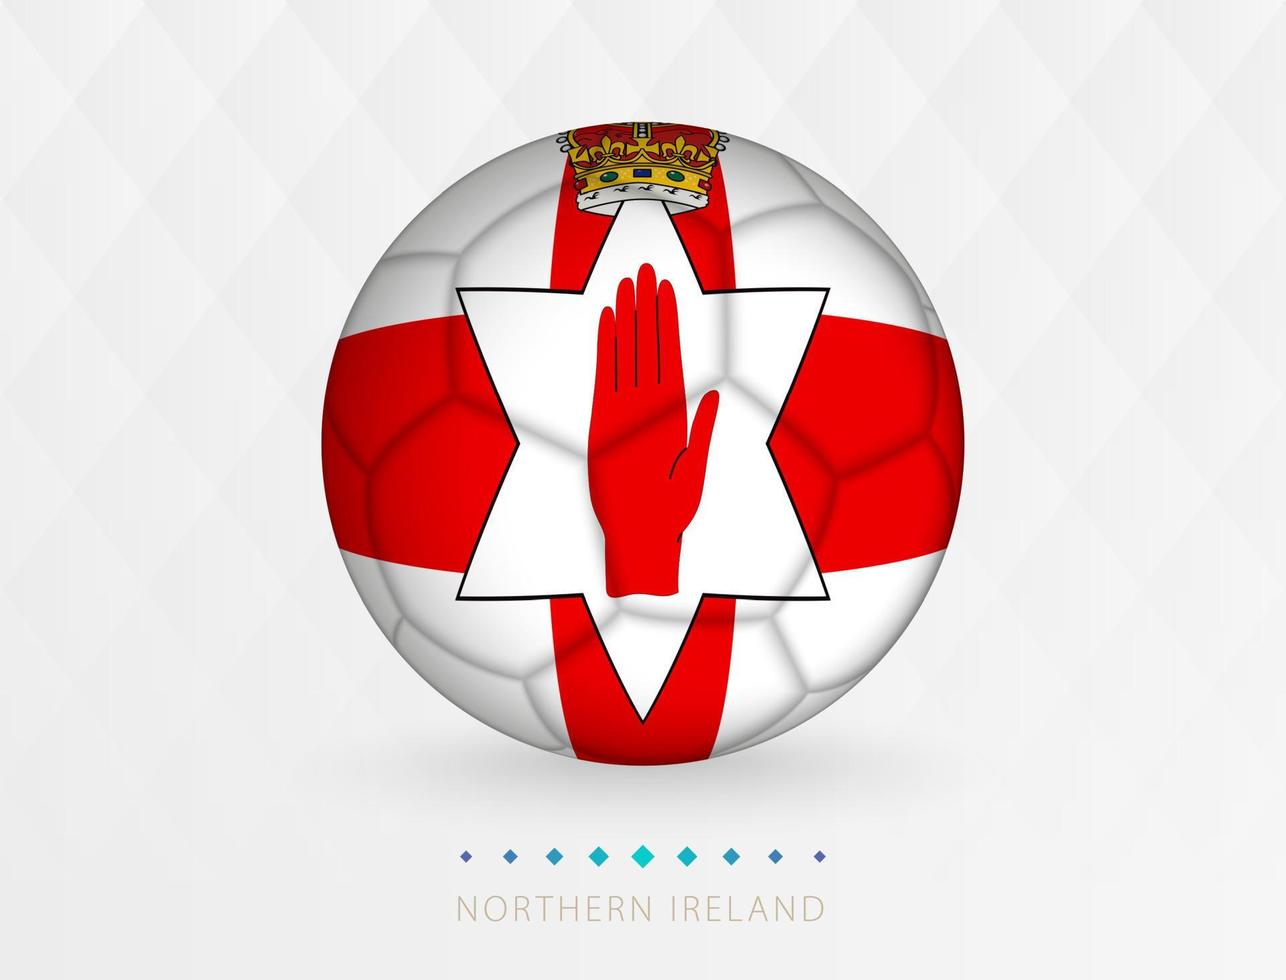 Football ball with Northern Ireland flag pattern, soccer ball with flag of Northern Ireland national team. vector